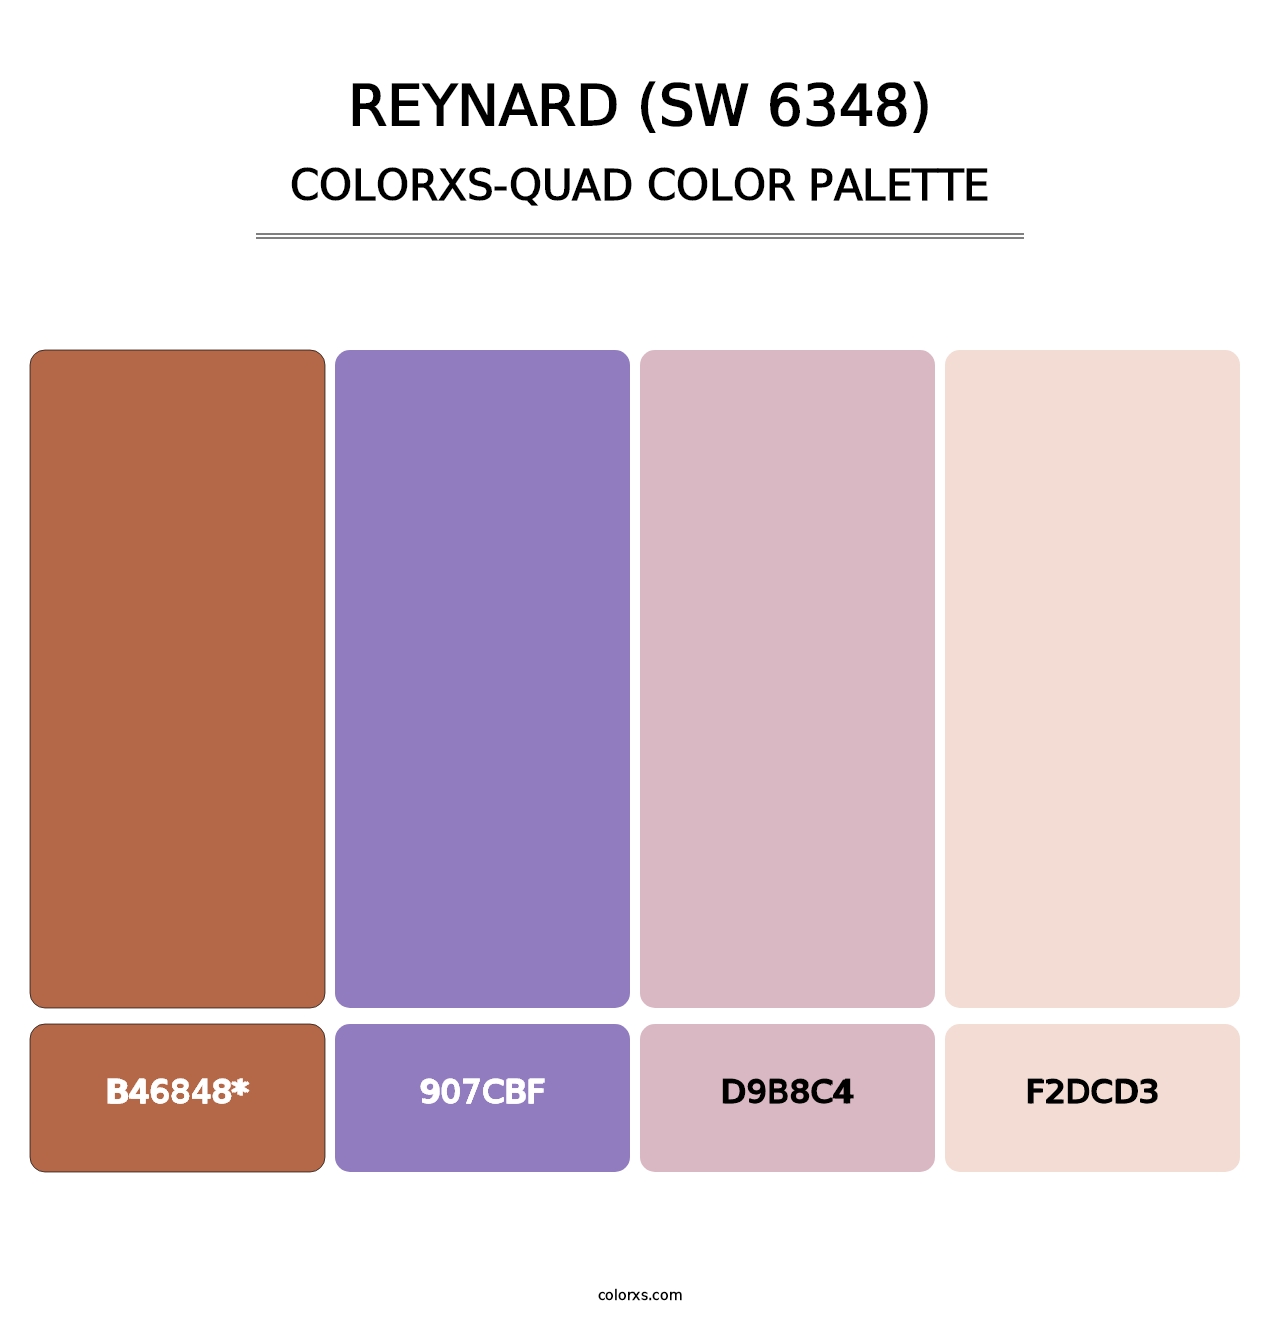 Reynard (SW 6348) - Colorxs Quad Palette